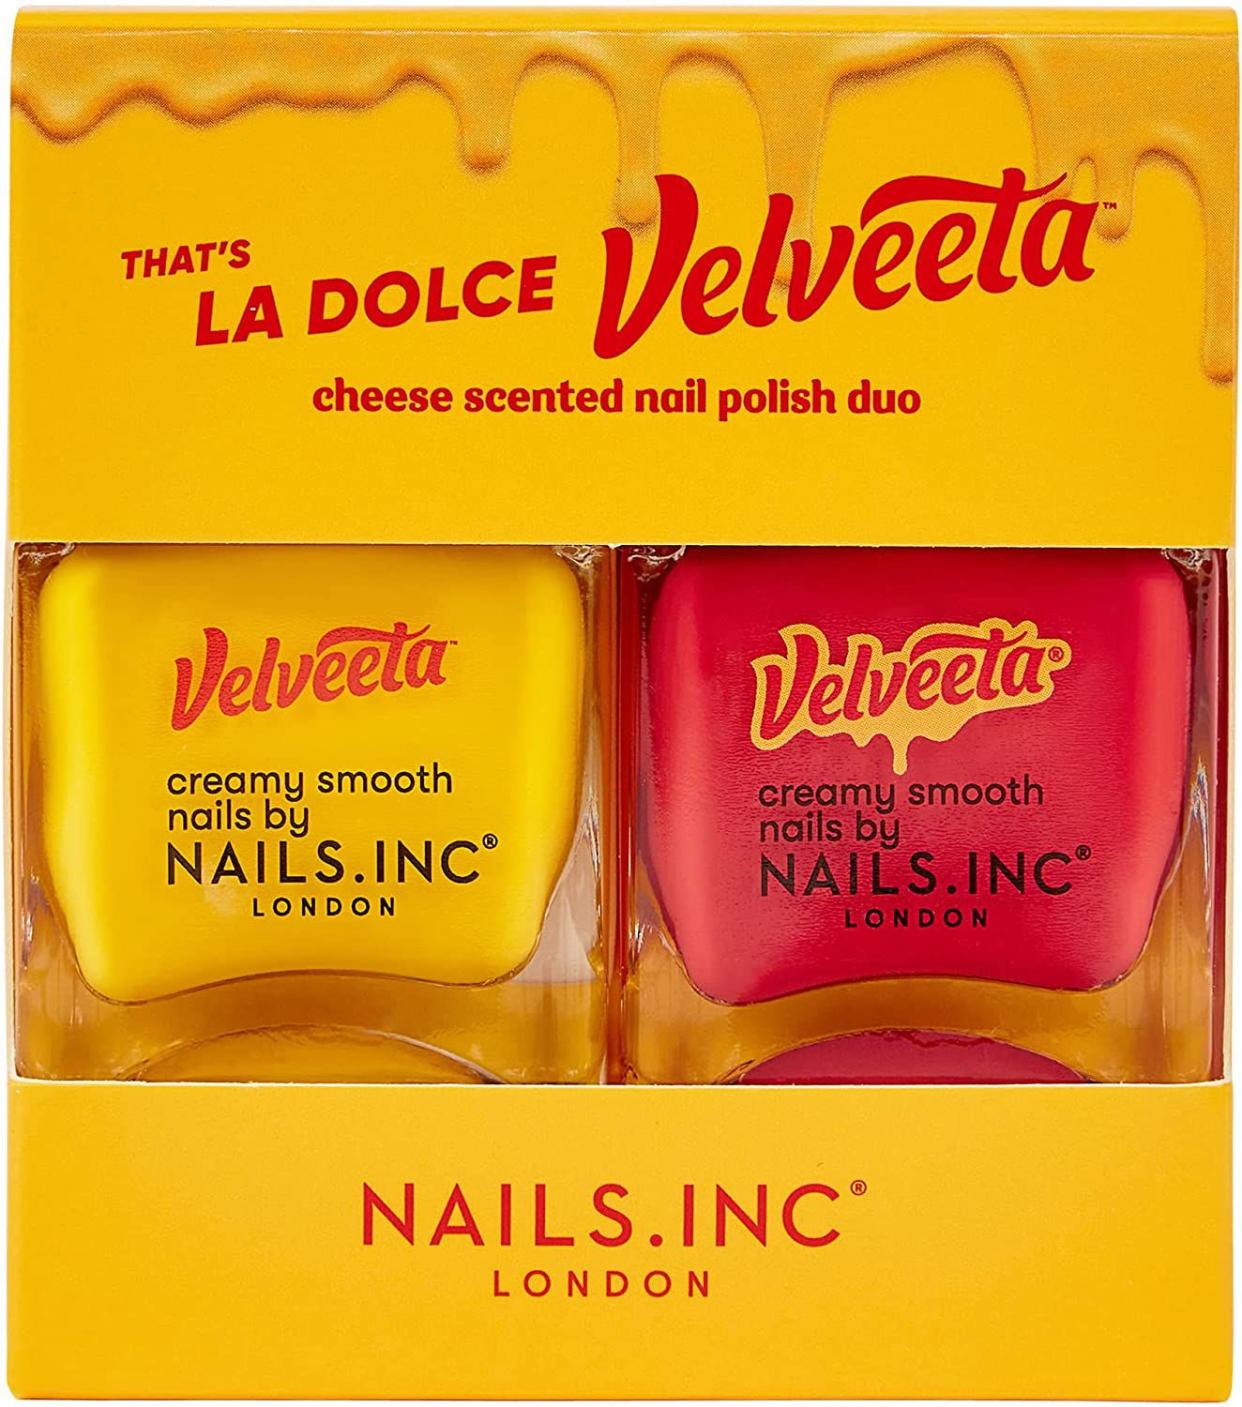 Velveeta and Nails, Inc.